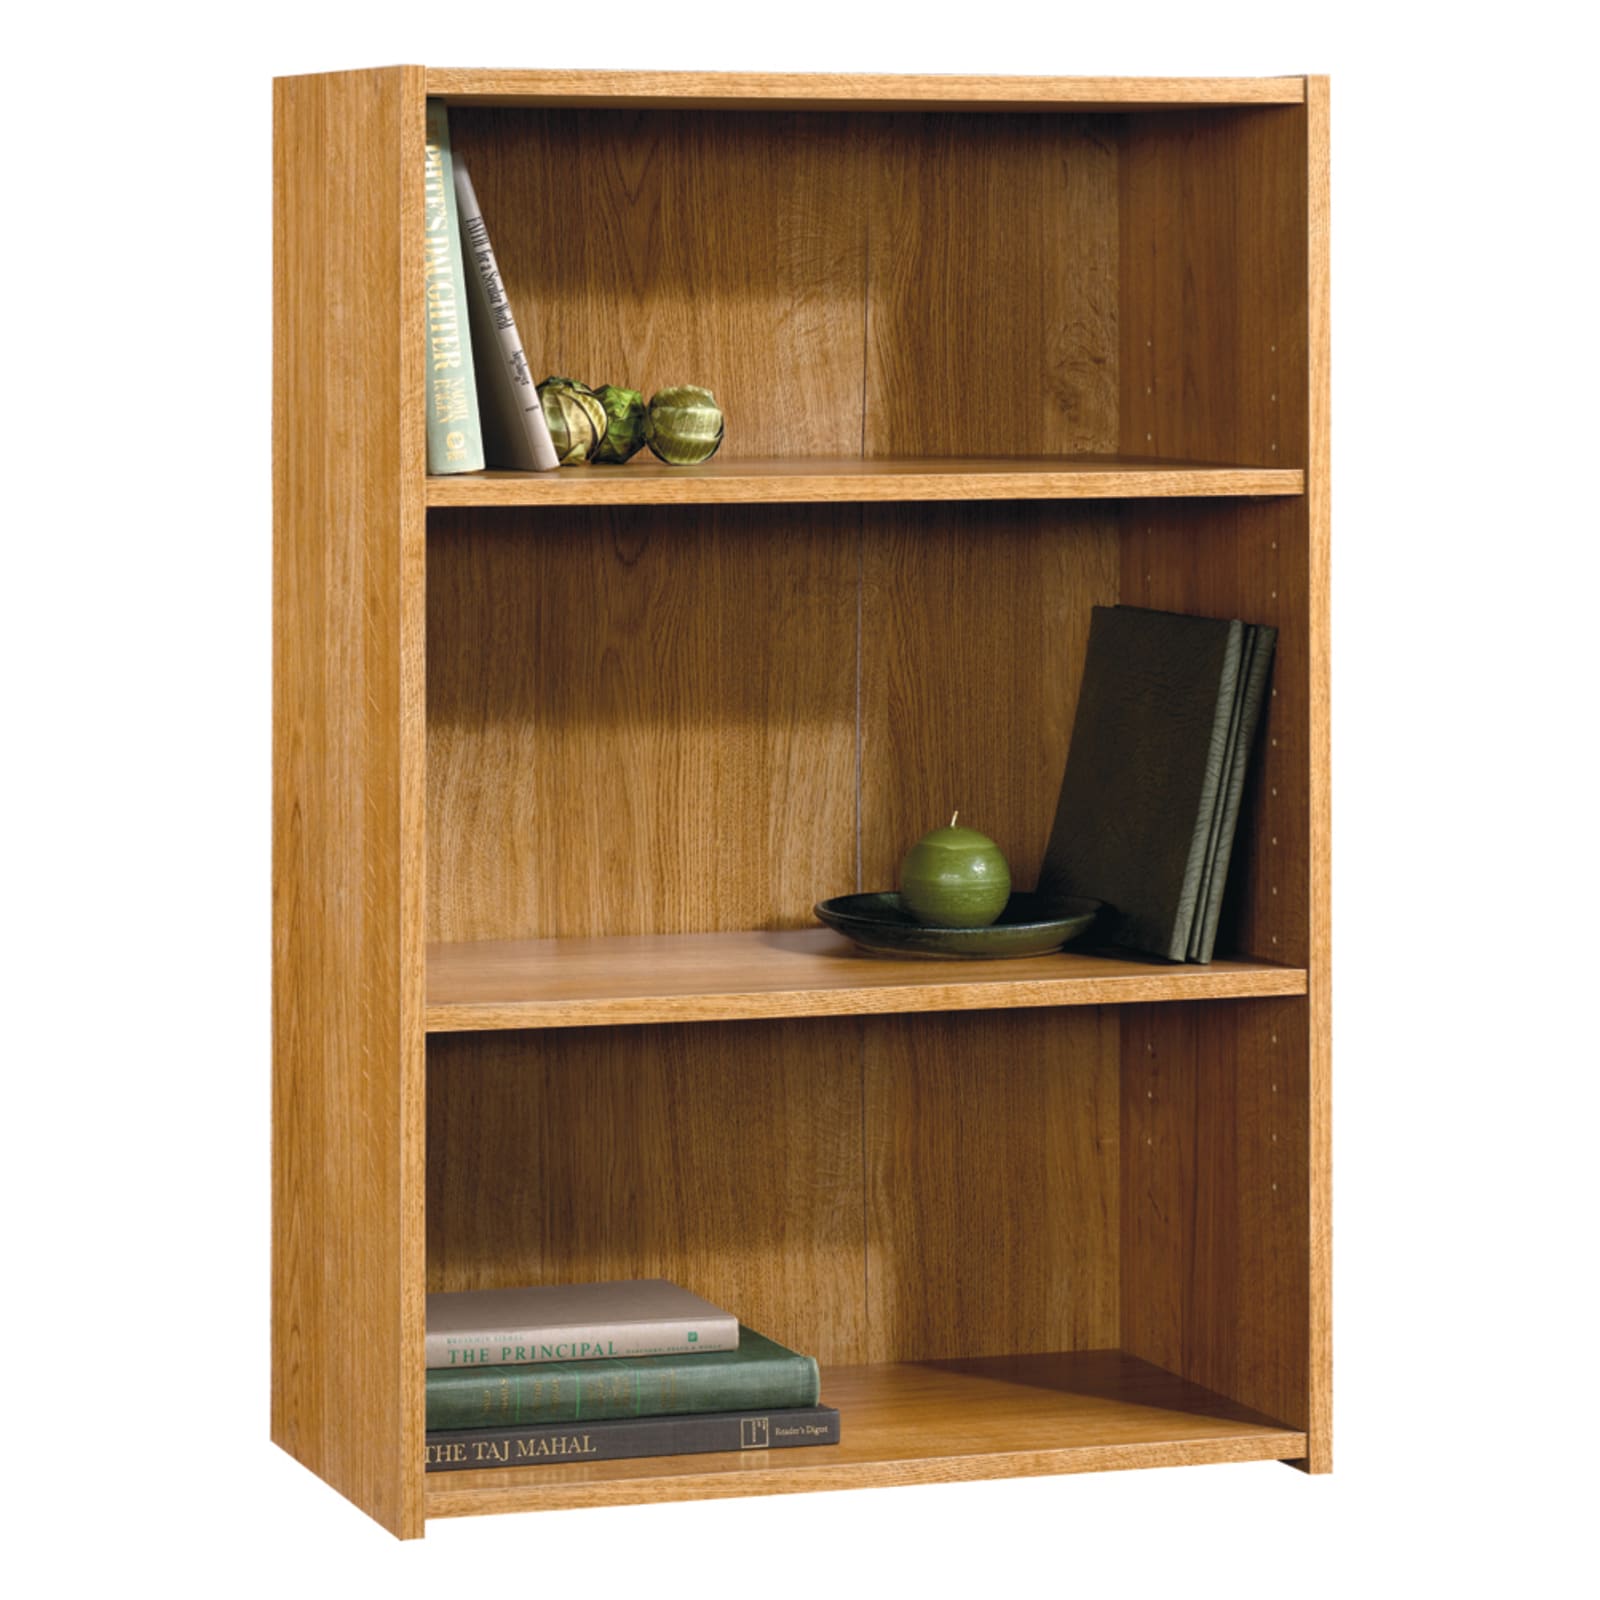 Highland Narrow Storage Bookshelf with Drawers